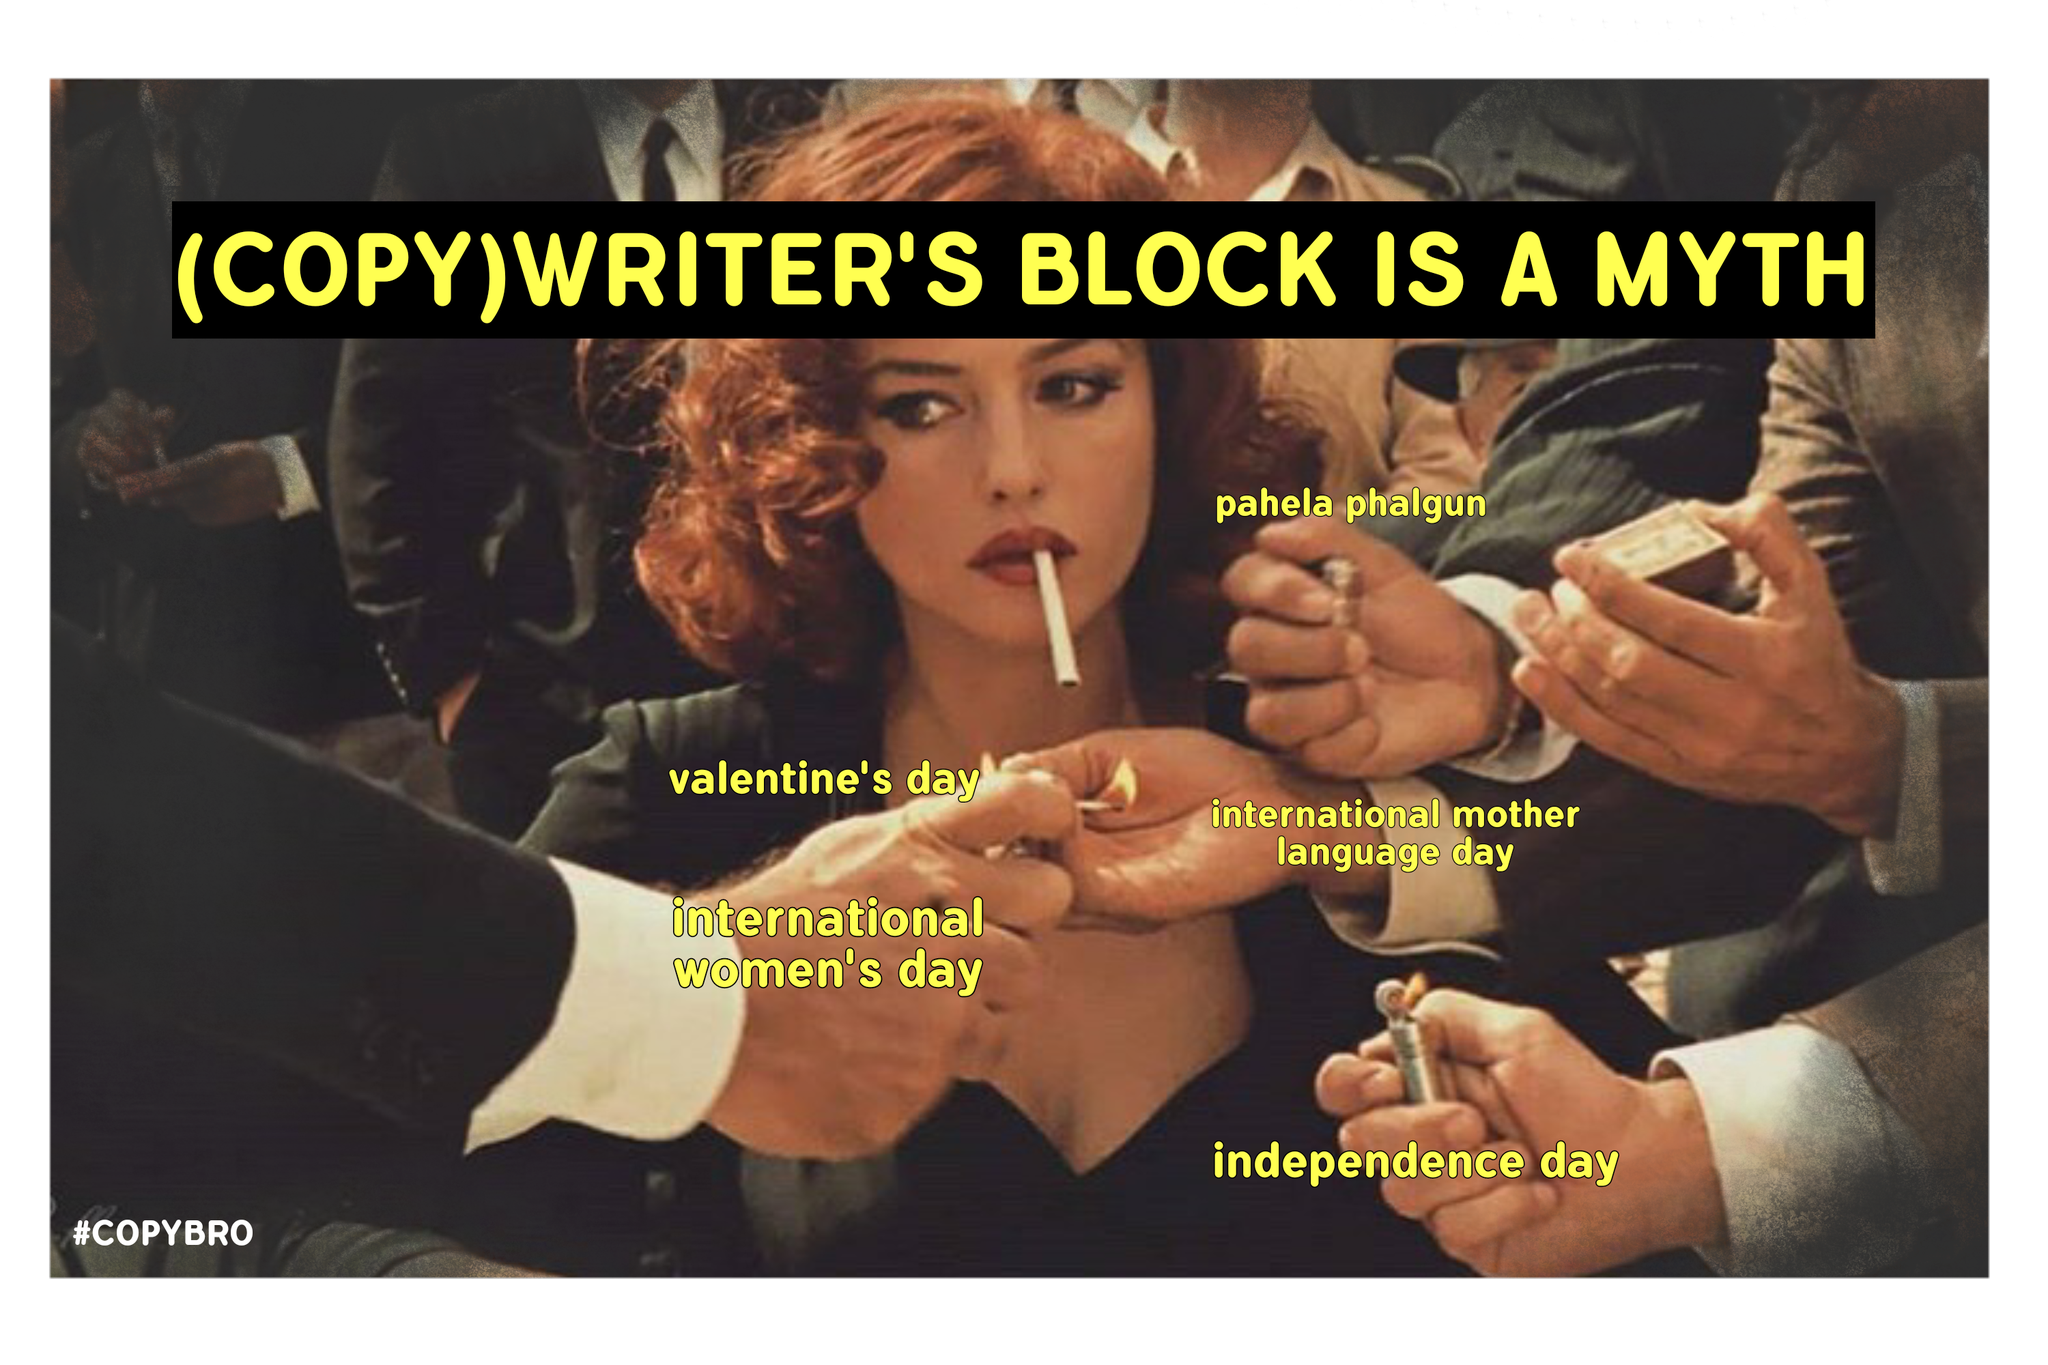 (COPY)WRITER’S BLOCK IS A MYTH